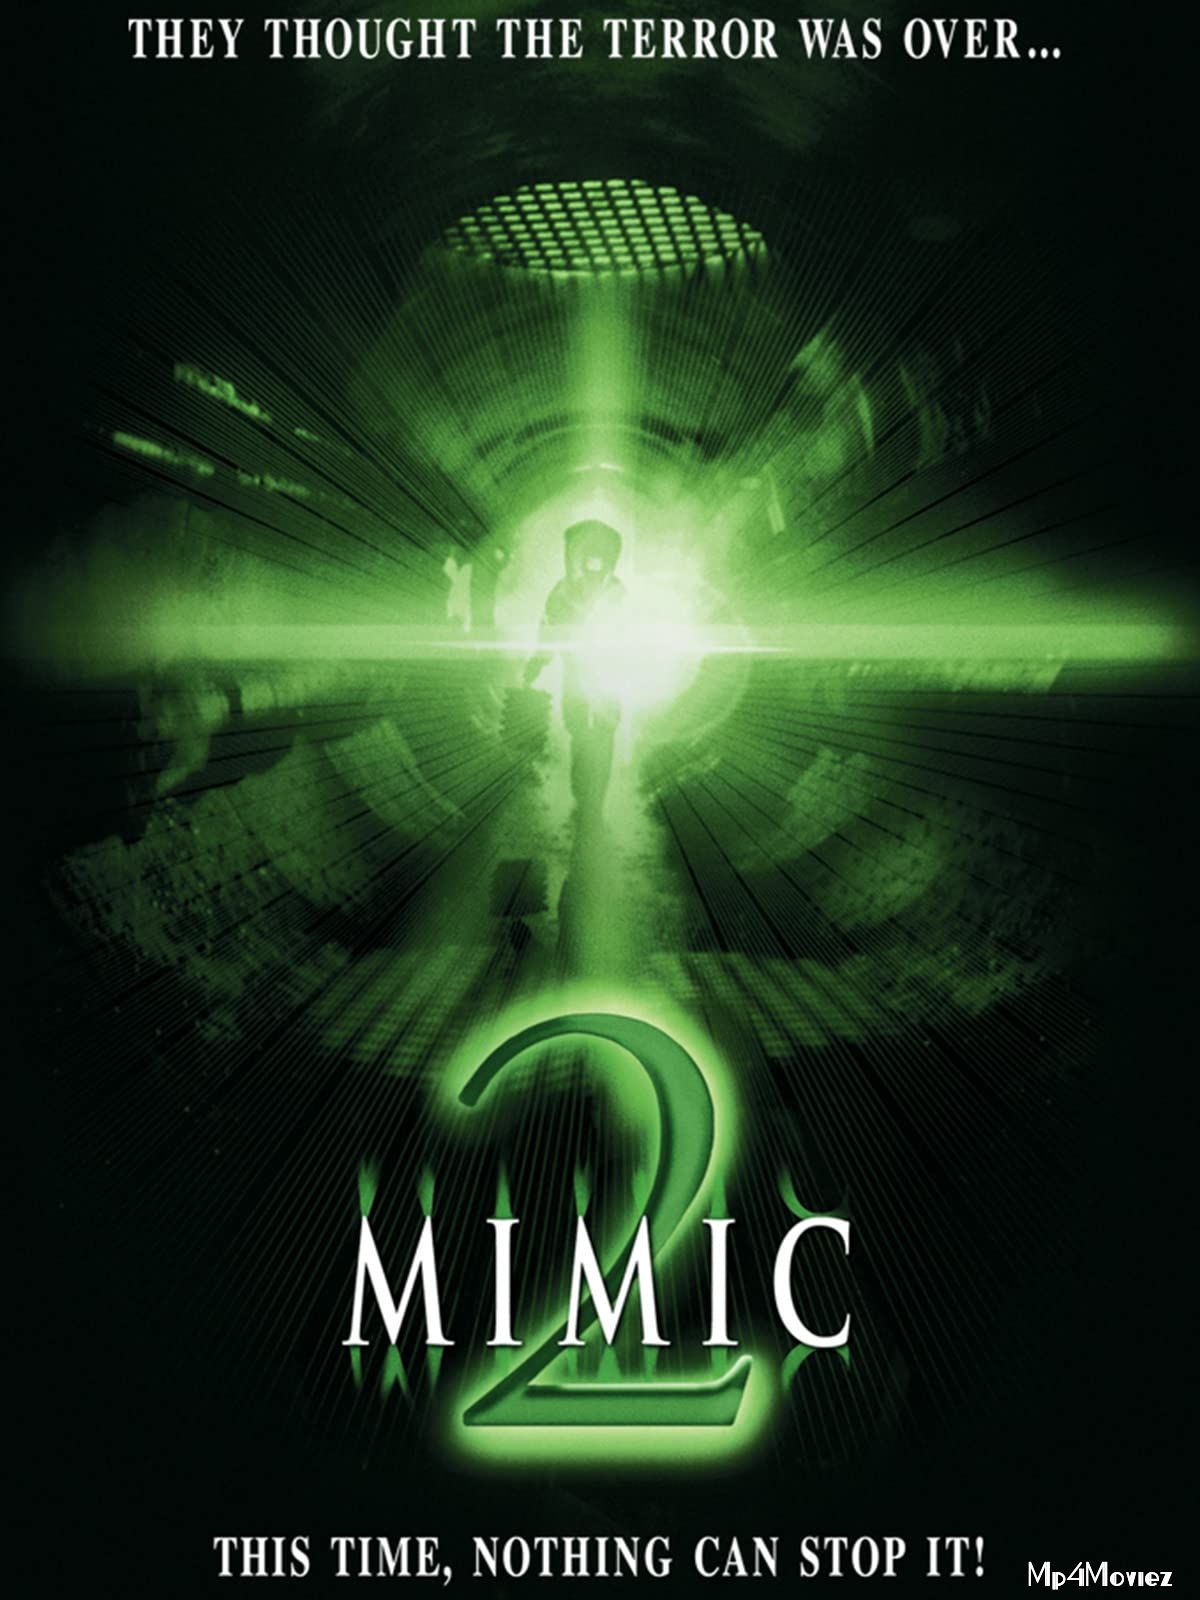 Mimic 2 (2001) Hindi Dubbed Movie download full movie